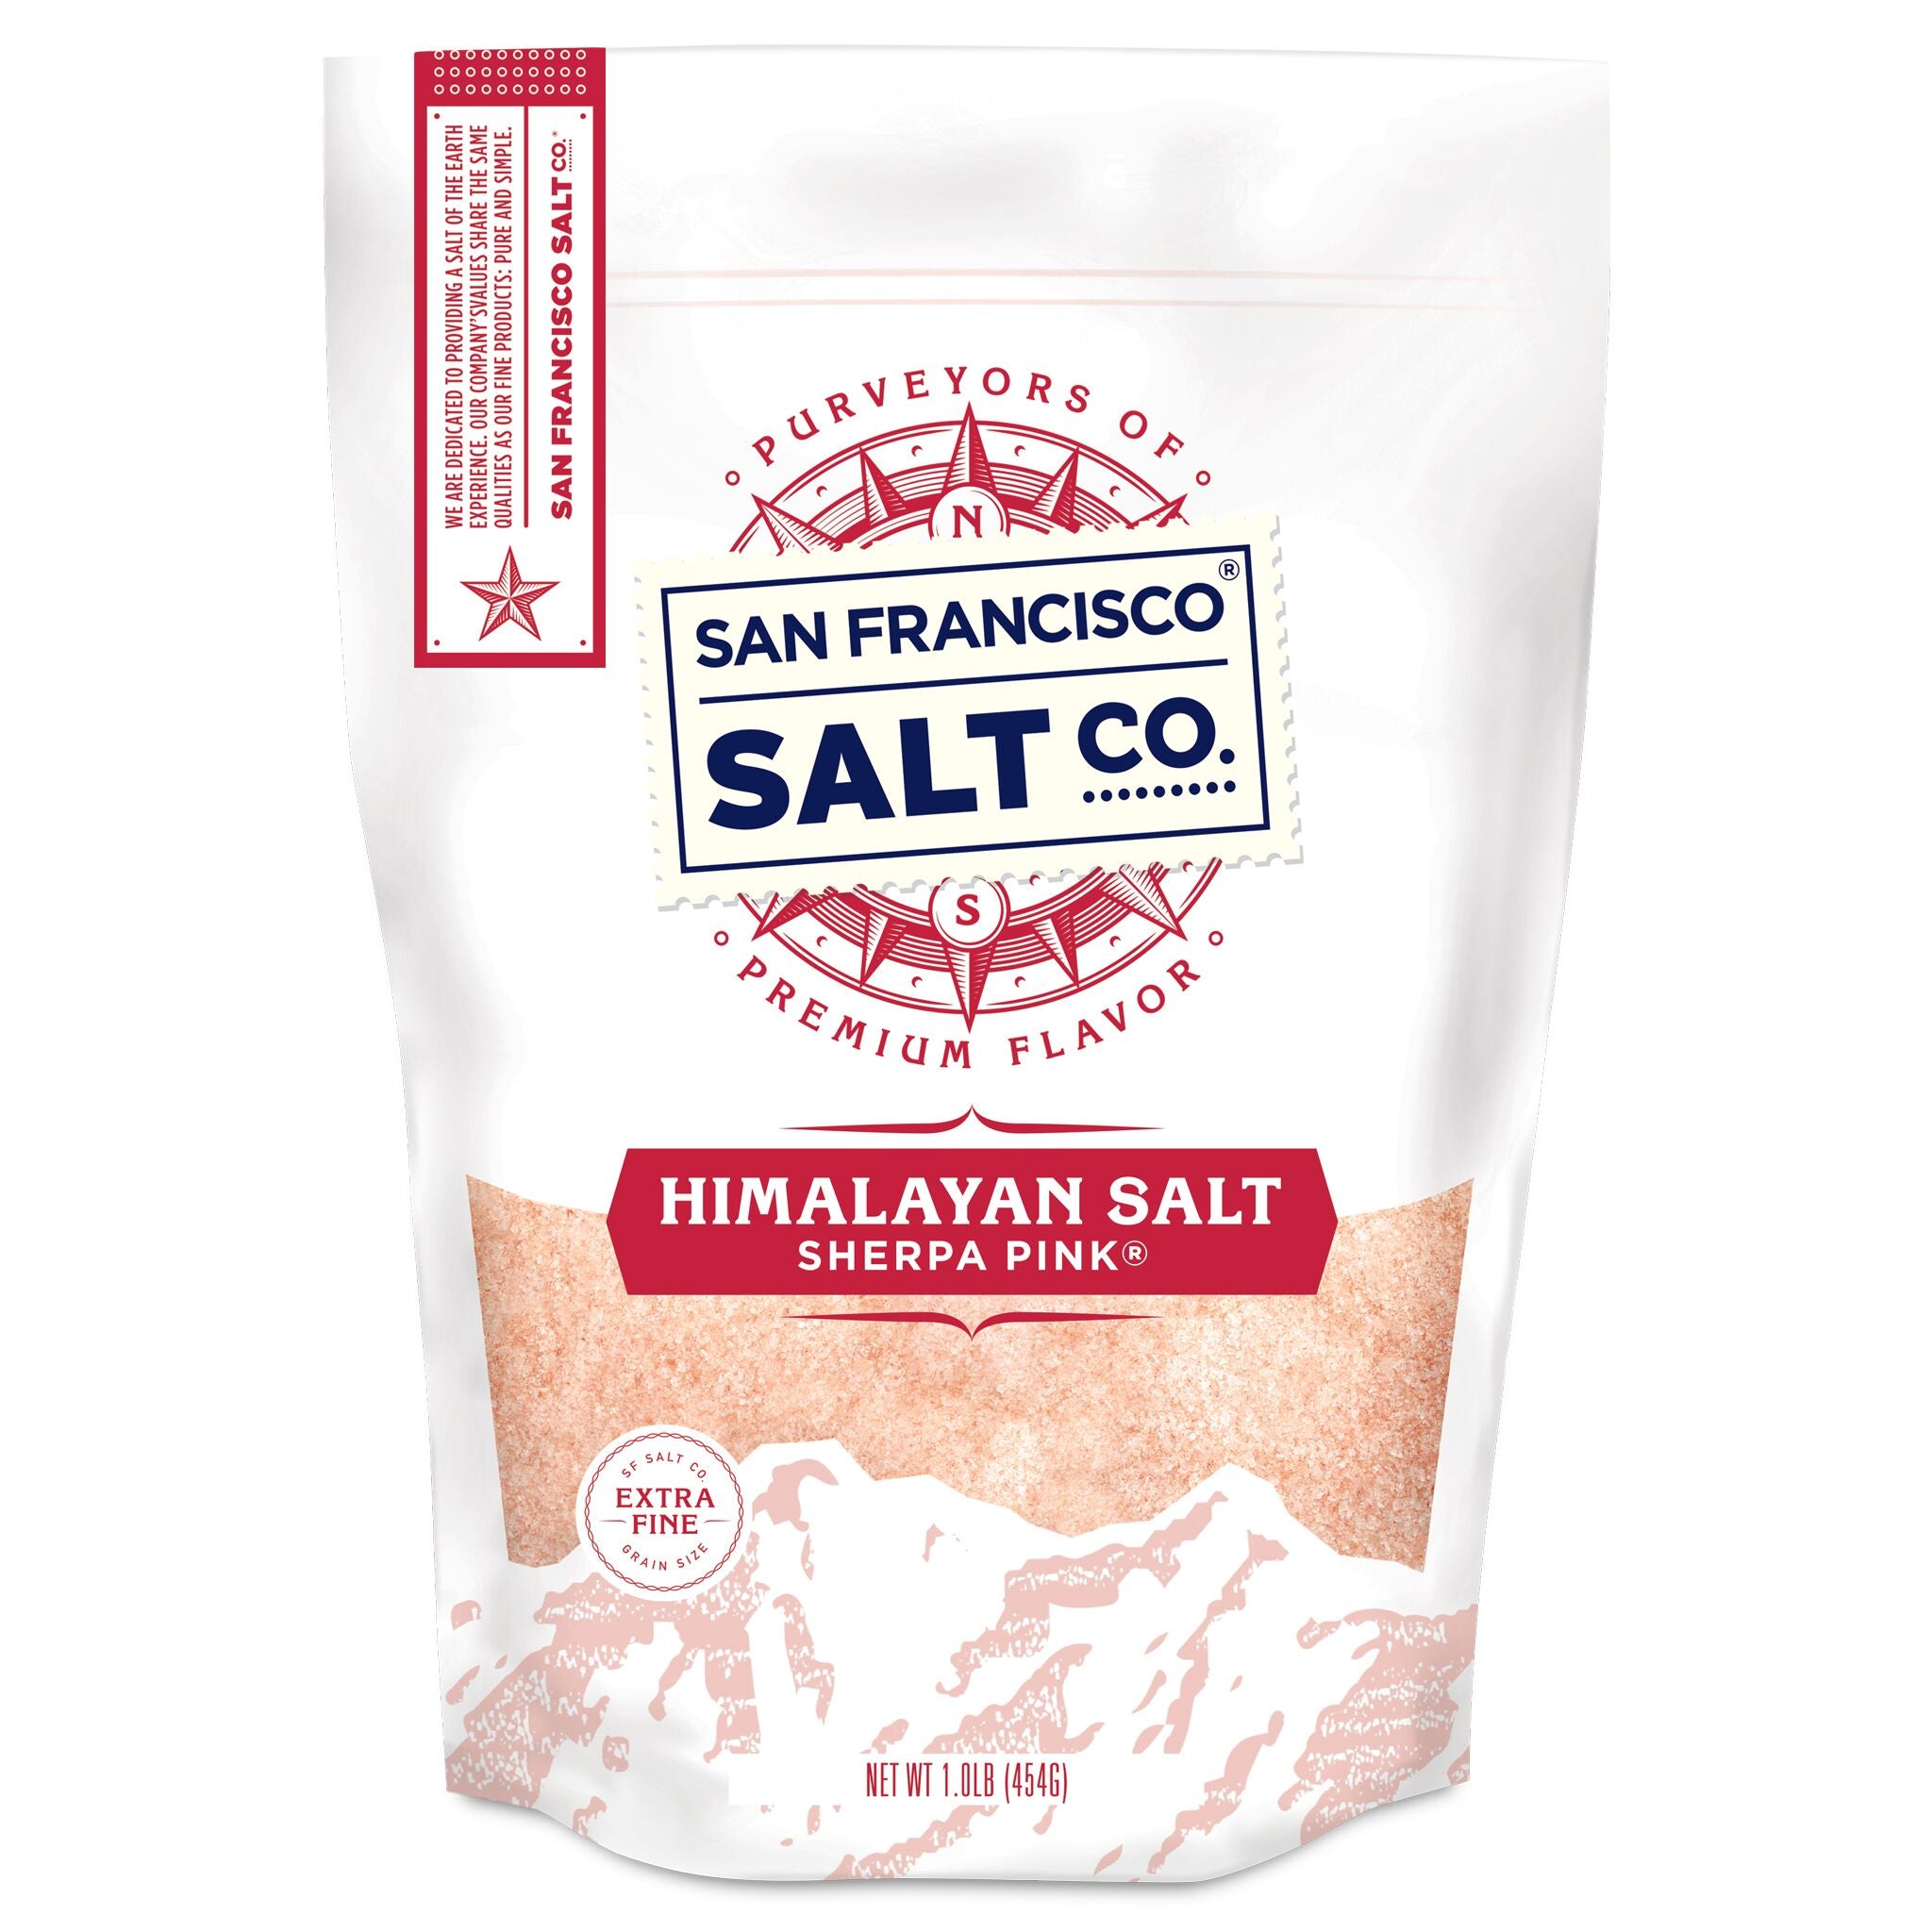 6 Wonderful Benefits of Himalayan Salt: The Purest Salt on Earth - NDTV Food